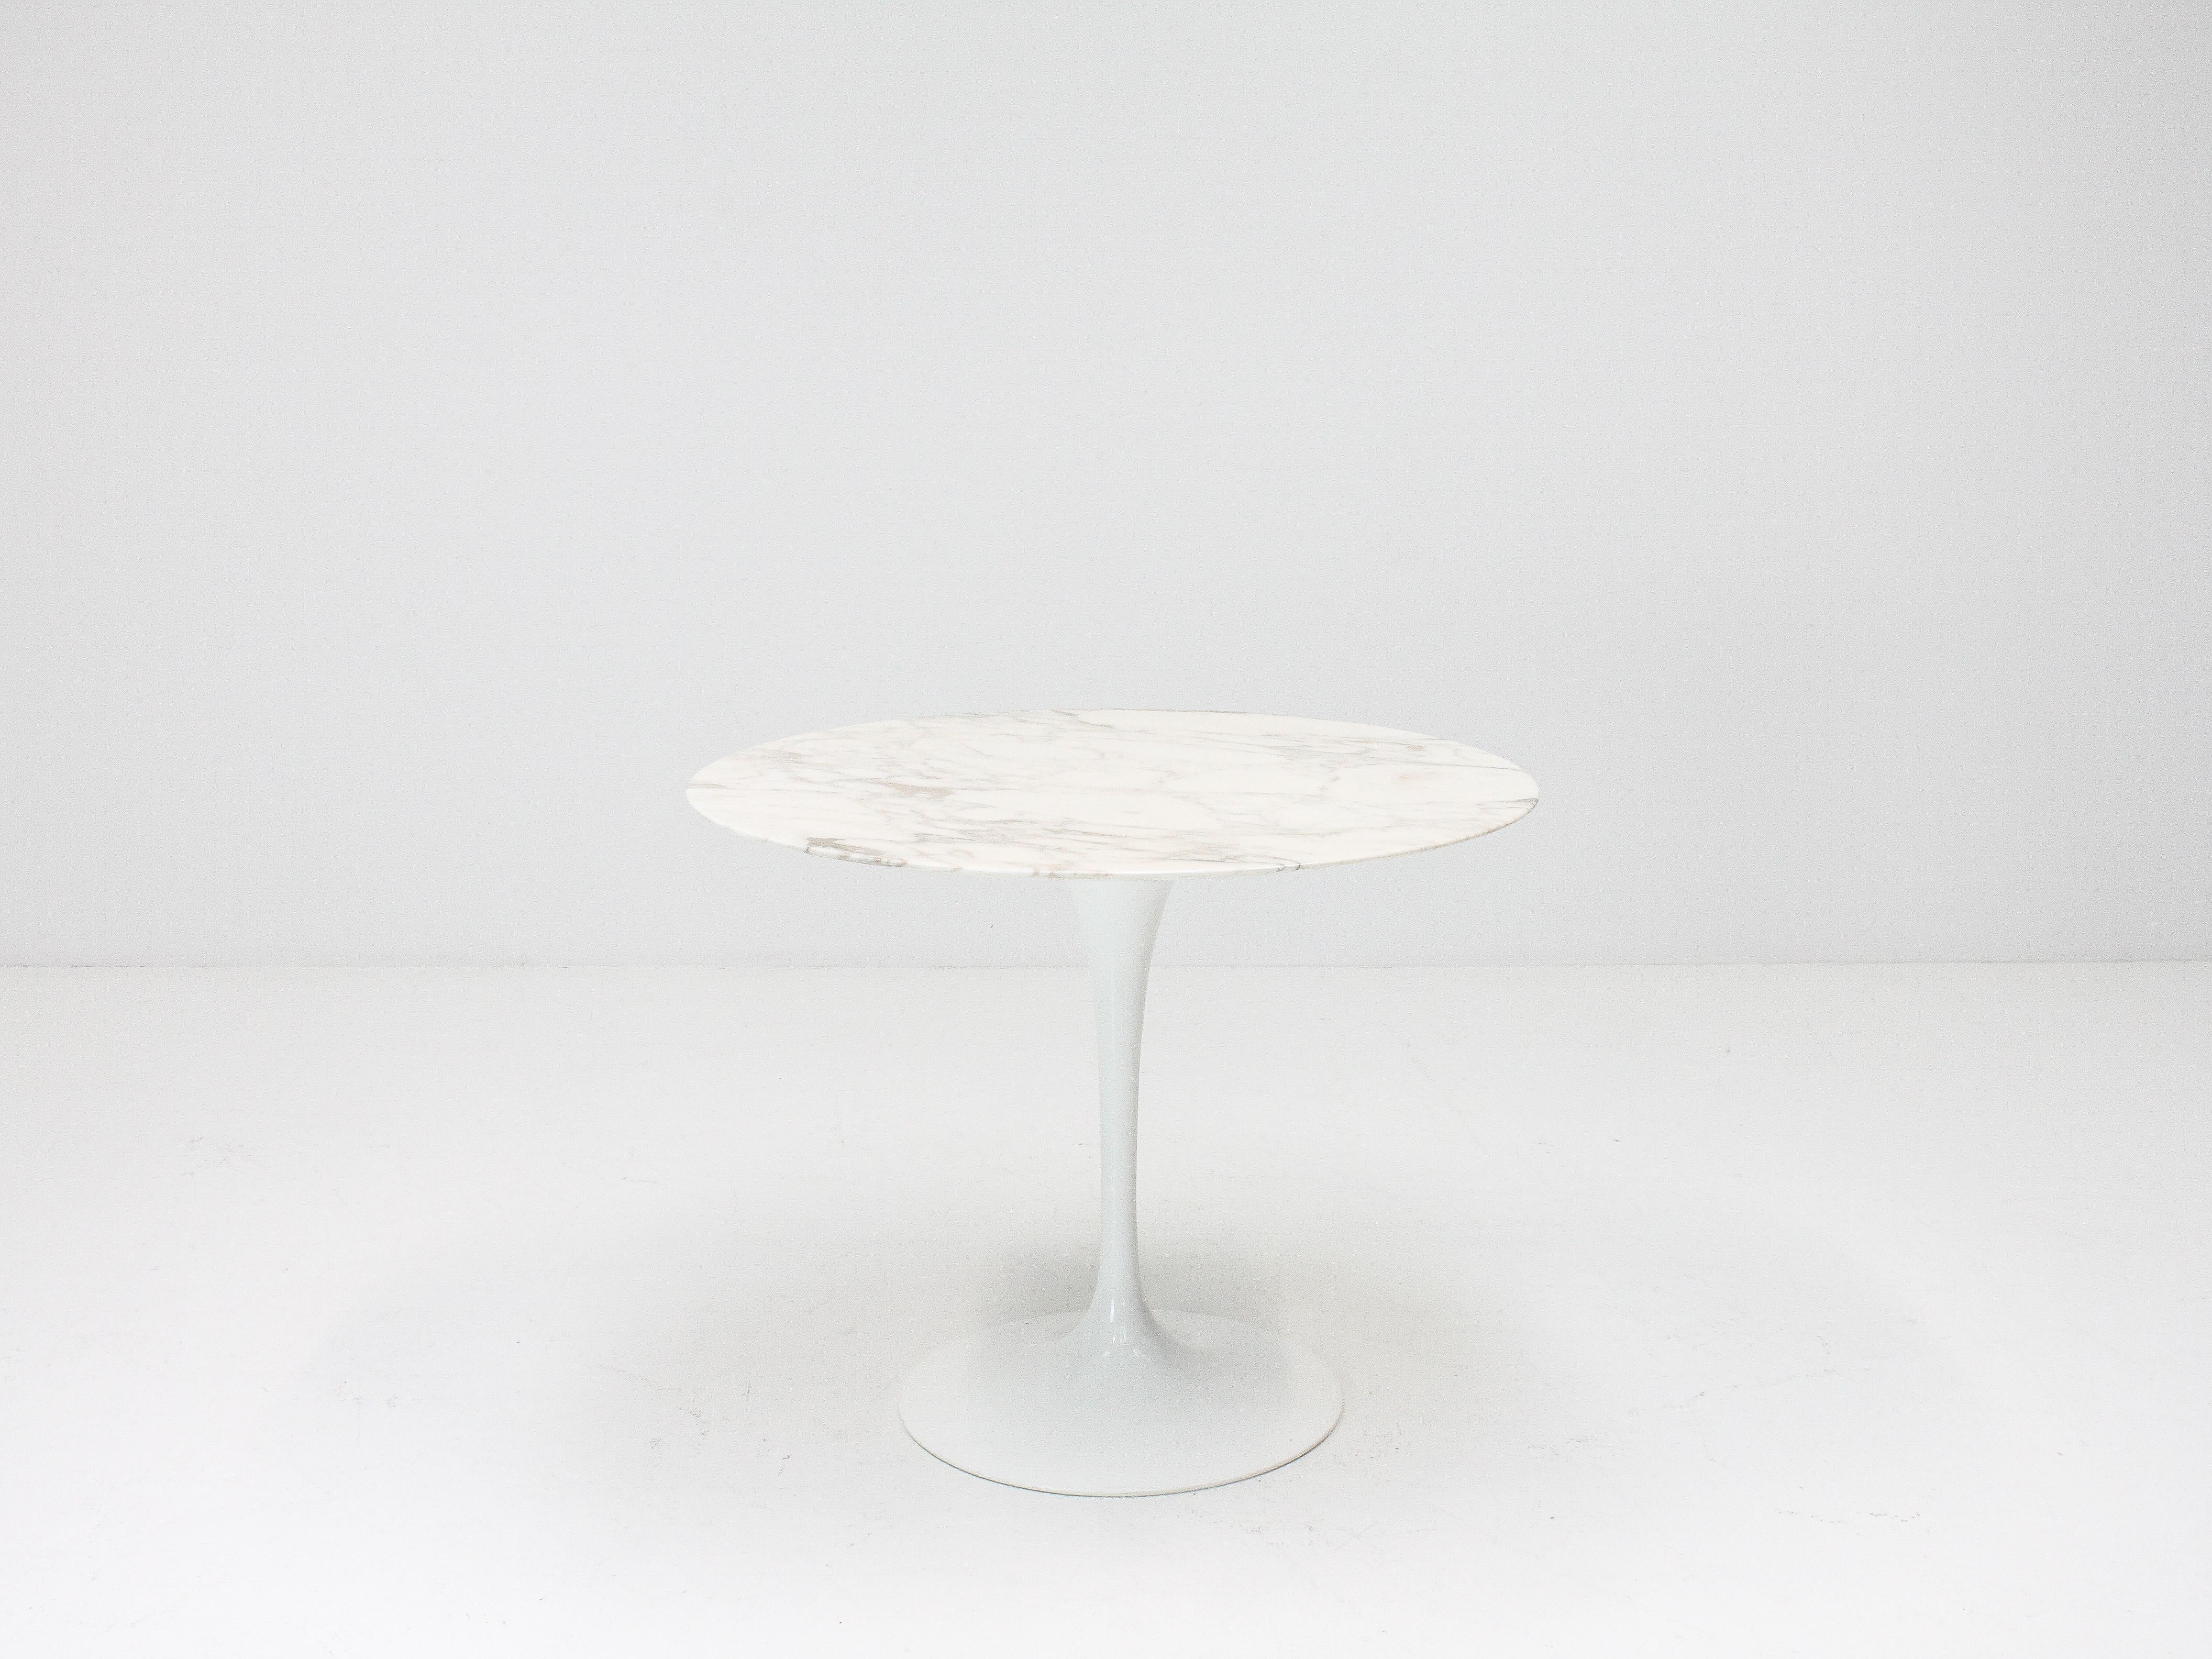 Italian Eero Saarinen Tulip Dining Table, Marble Top, Knoll, Designed 1956